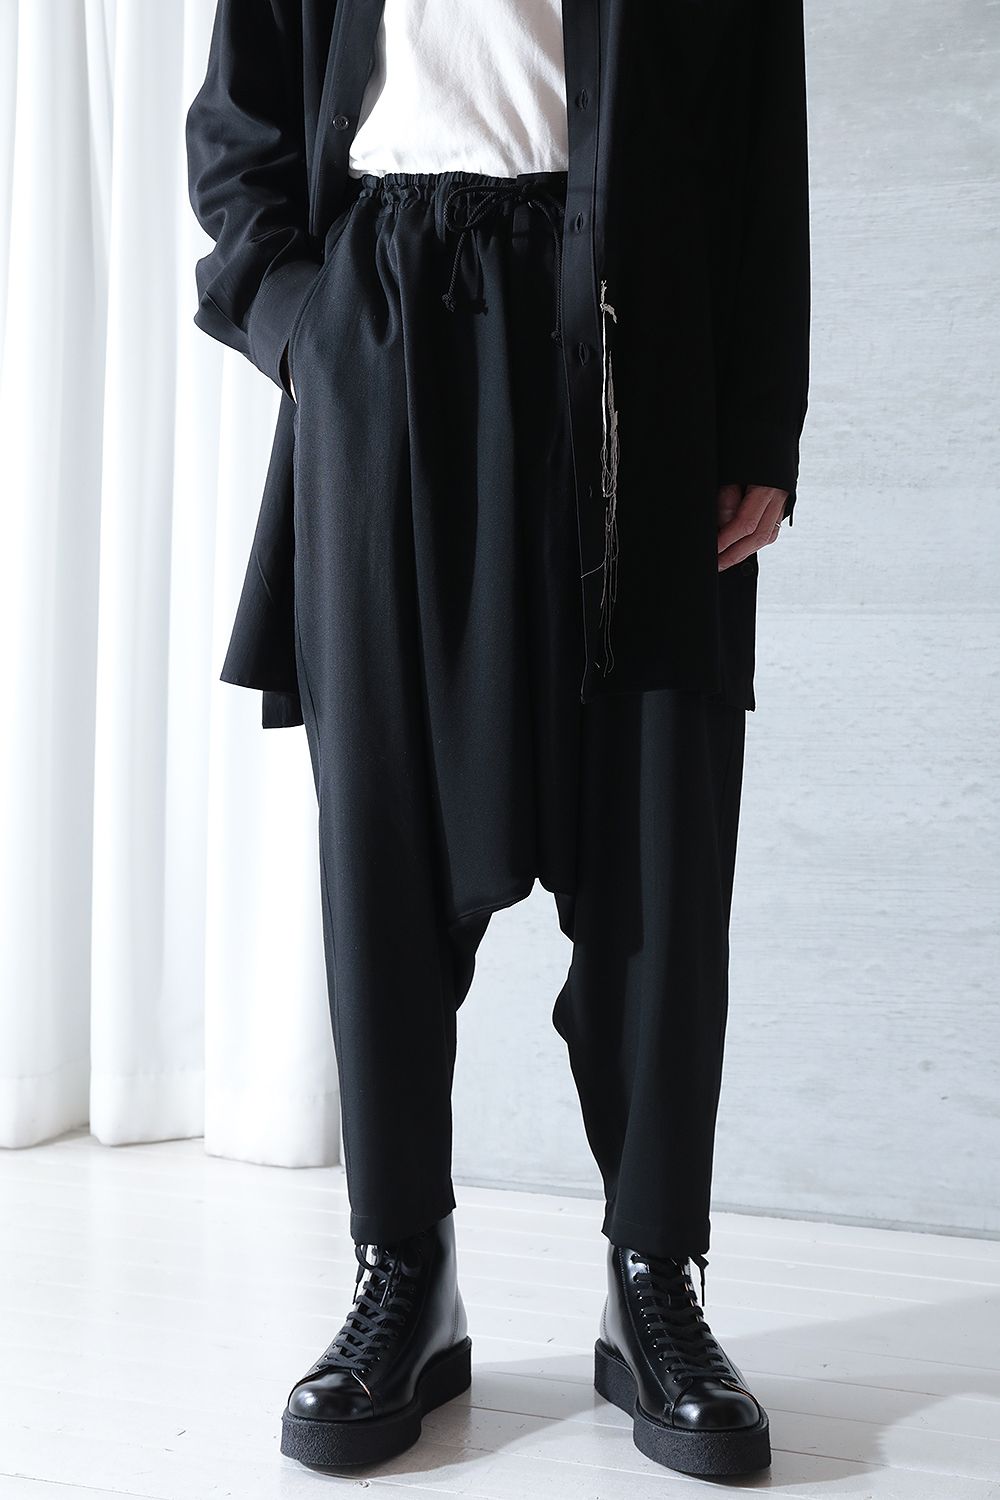 Yohji Yamamoto / ヨウジヤマモト】ブランドを代表するパンツが待望の